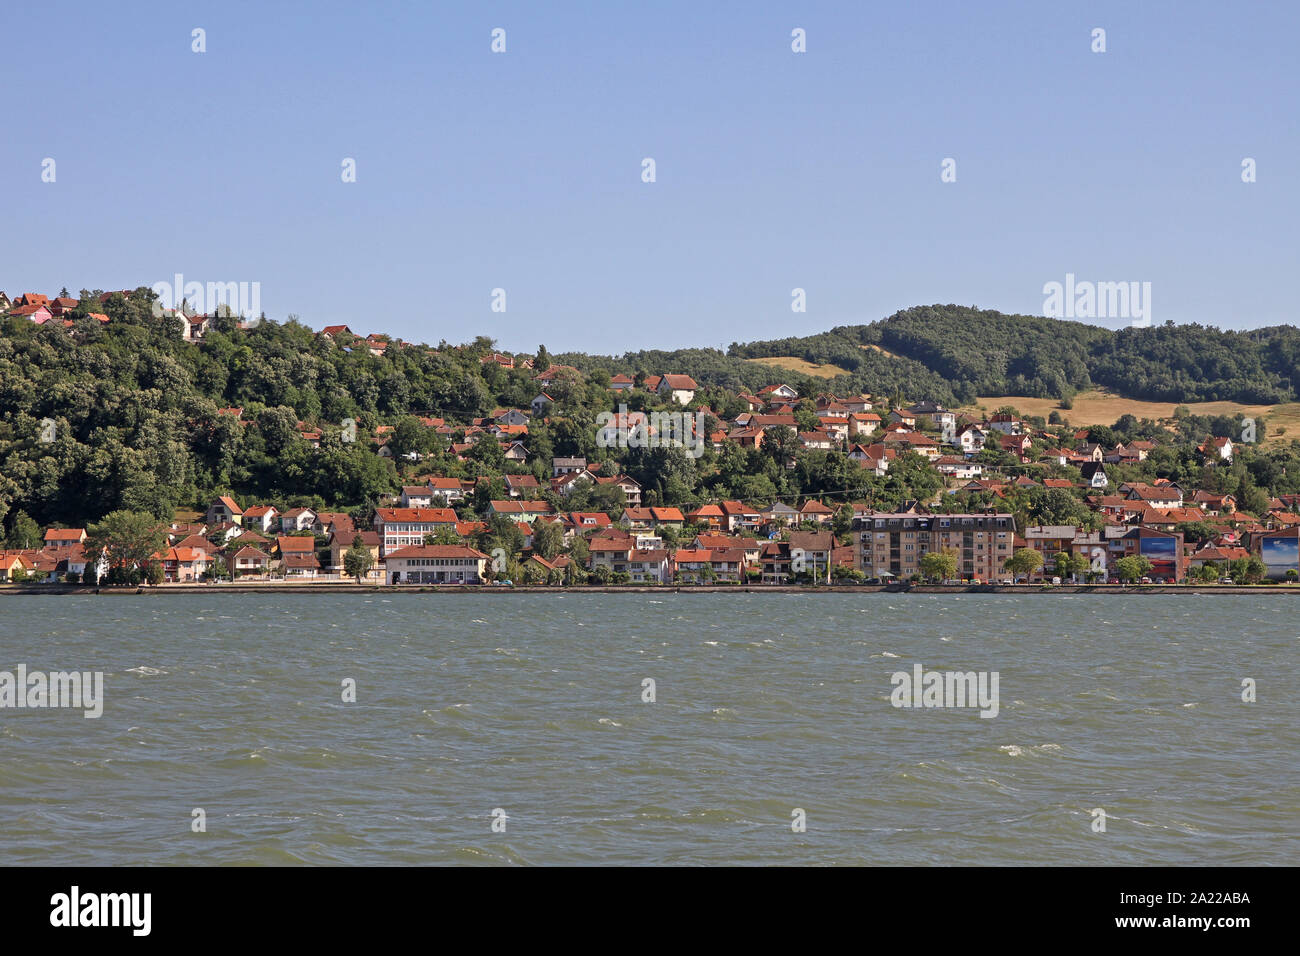 The Donji Milanovac town on the bank of the Danube River, border between Romania and Serbia, Donji Milanovac, Serbia. Stock Photo